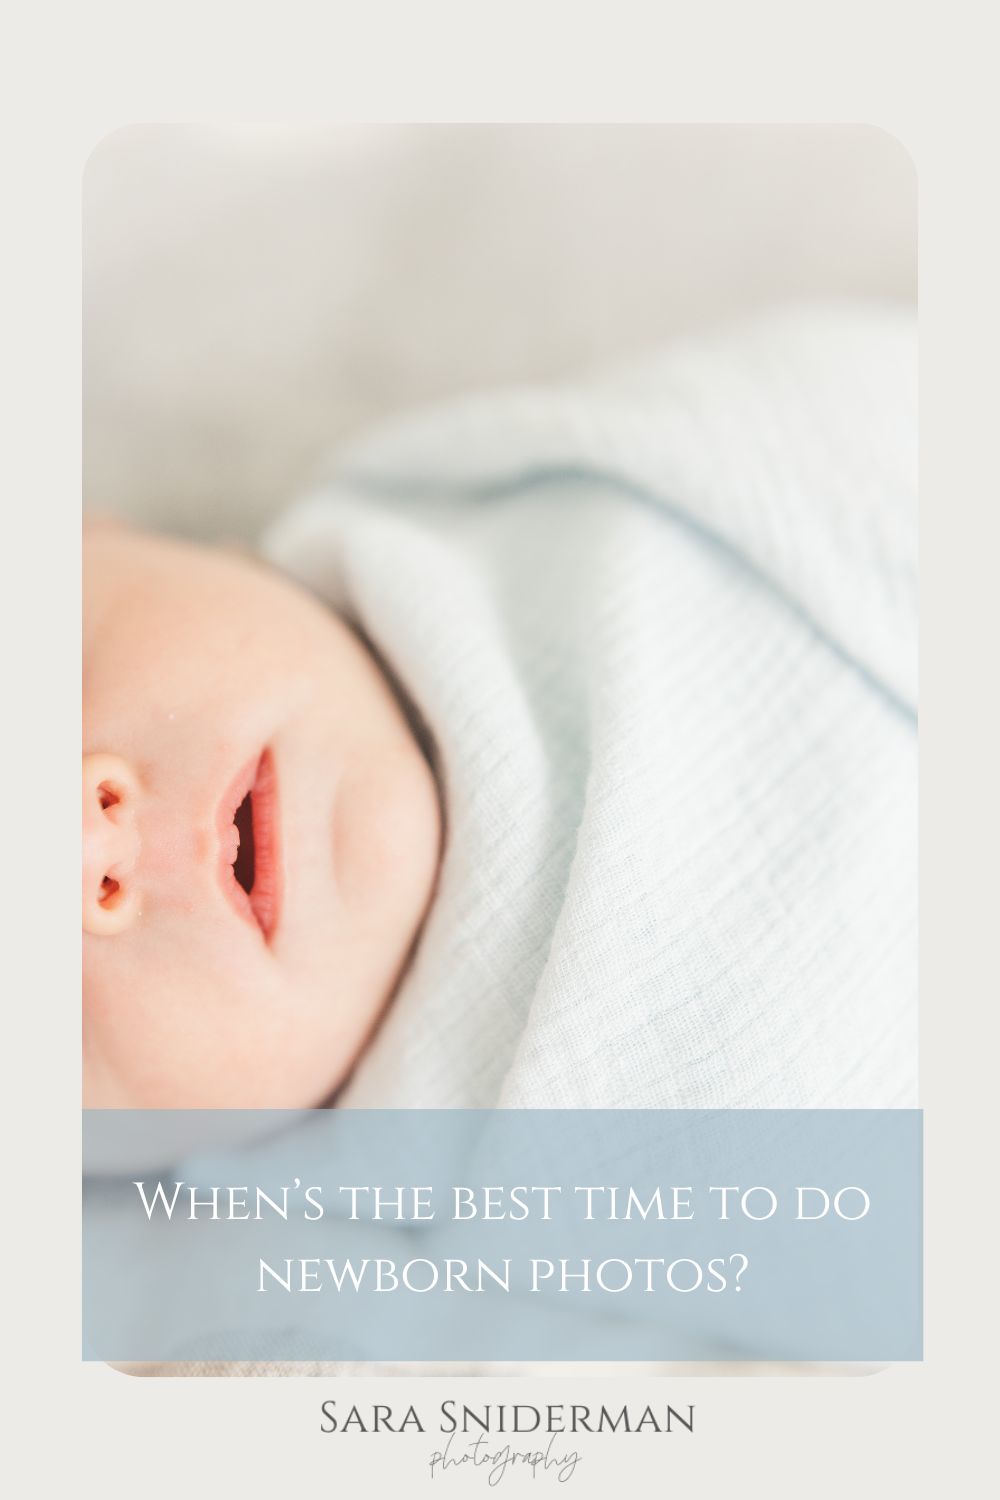 Newborn photos with Sara Sniderman Photography in Natick Massachusetts